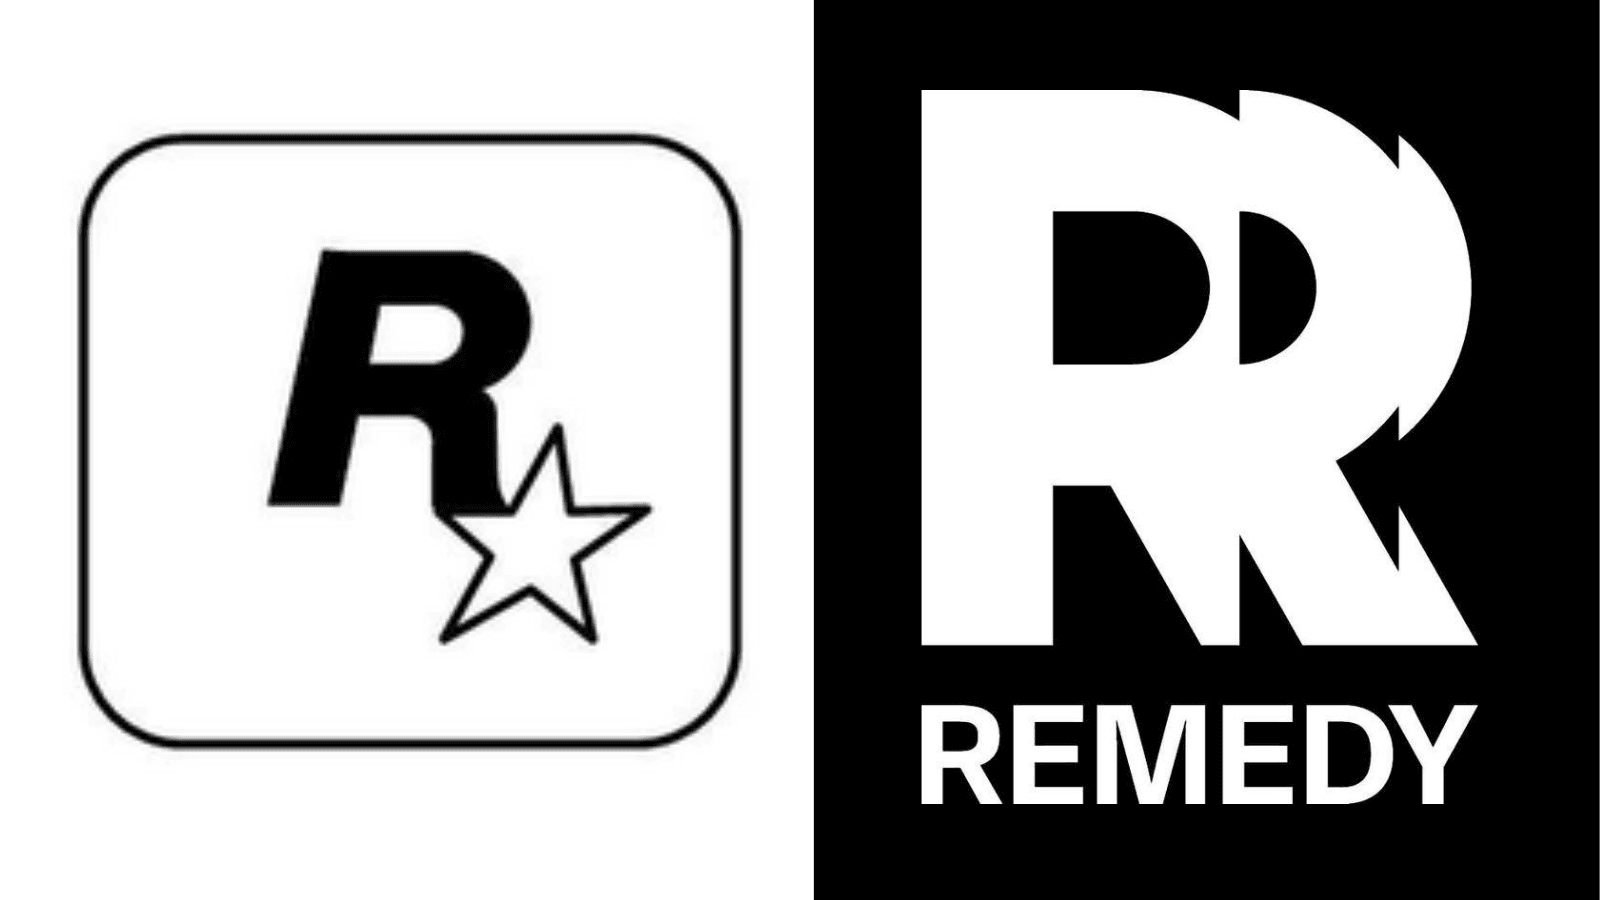 rockstar trademark dispute